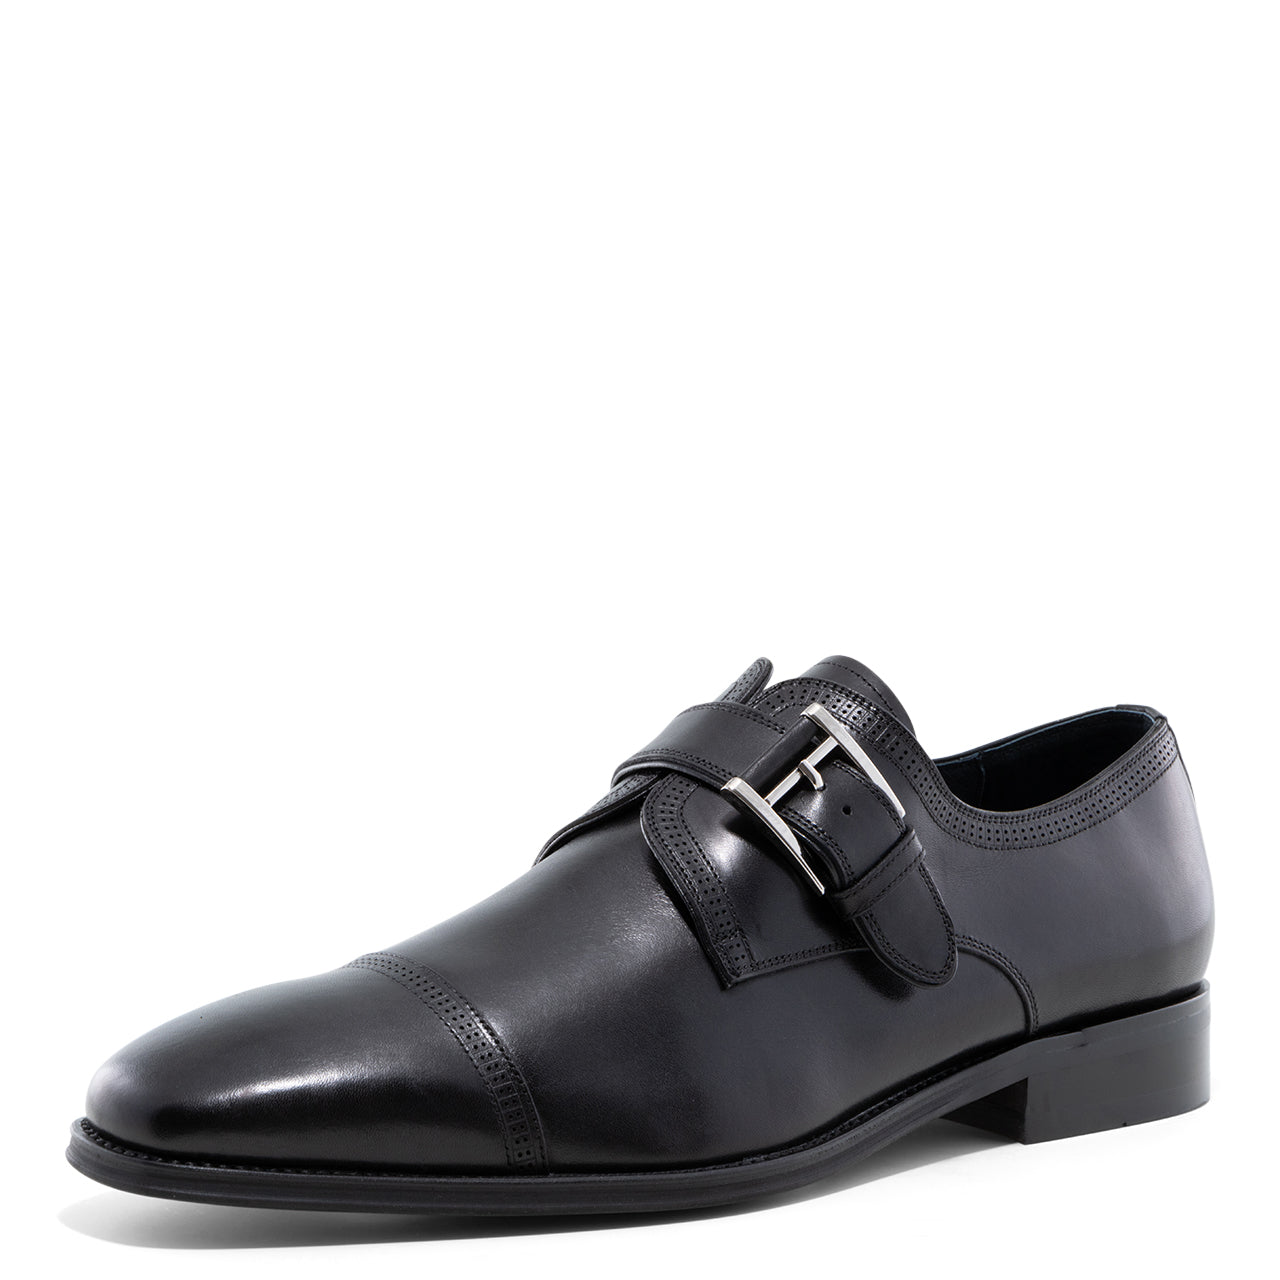 Mcneil - Black Single Monk Strap Oxford Dress Shoes for Men by Jump